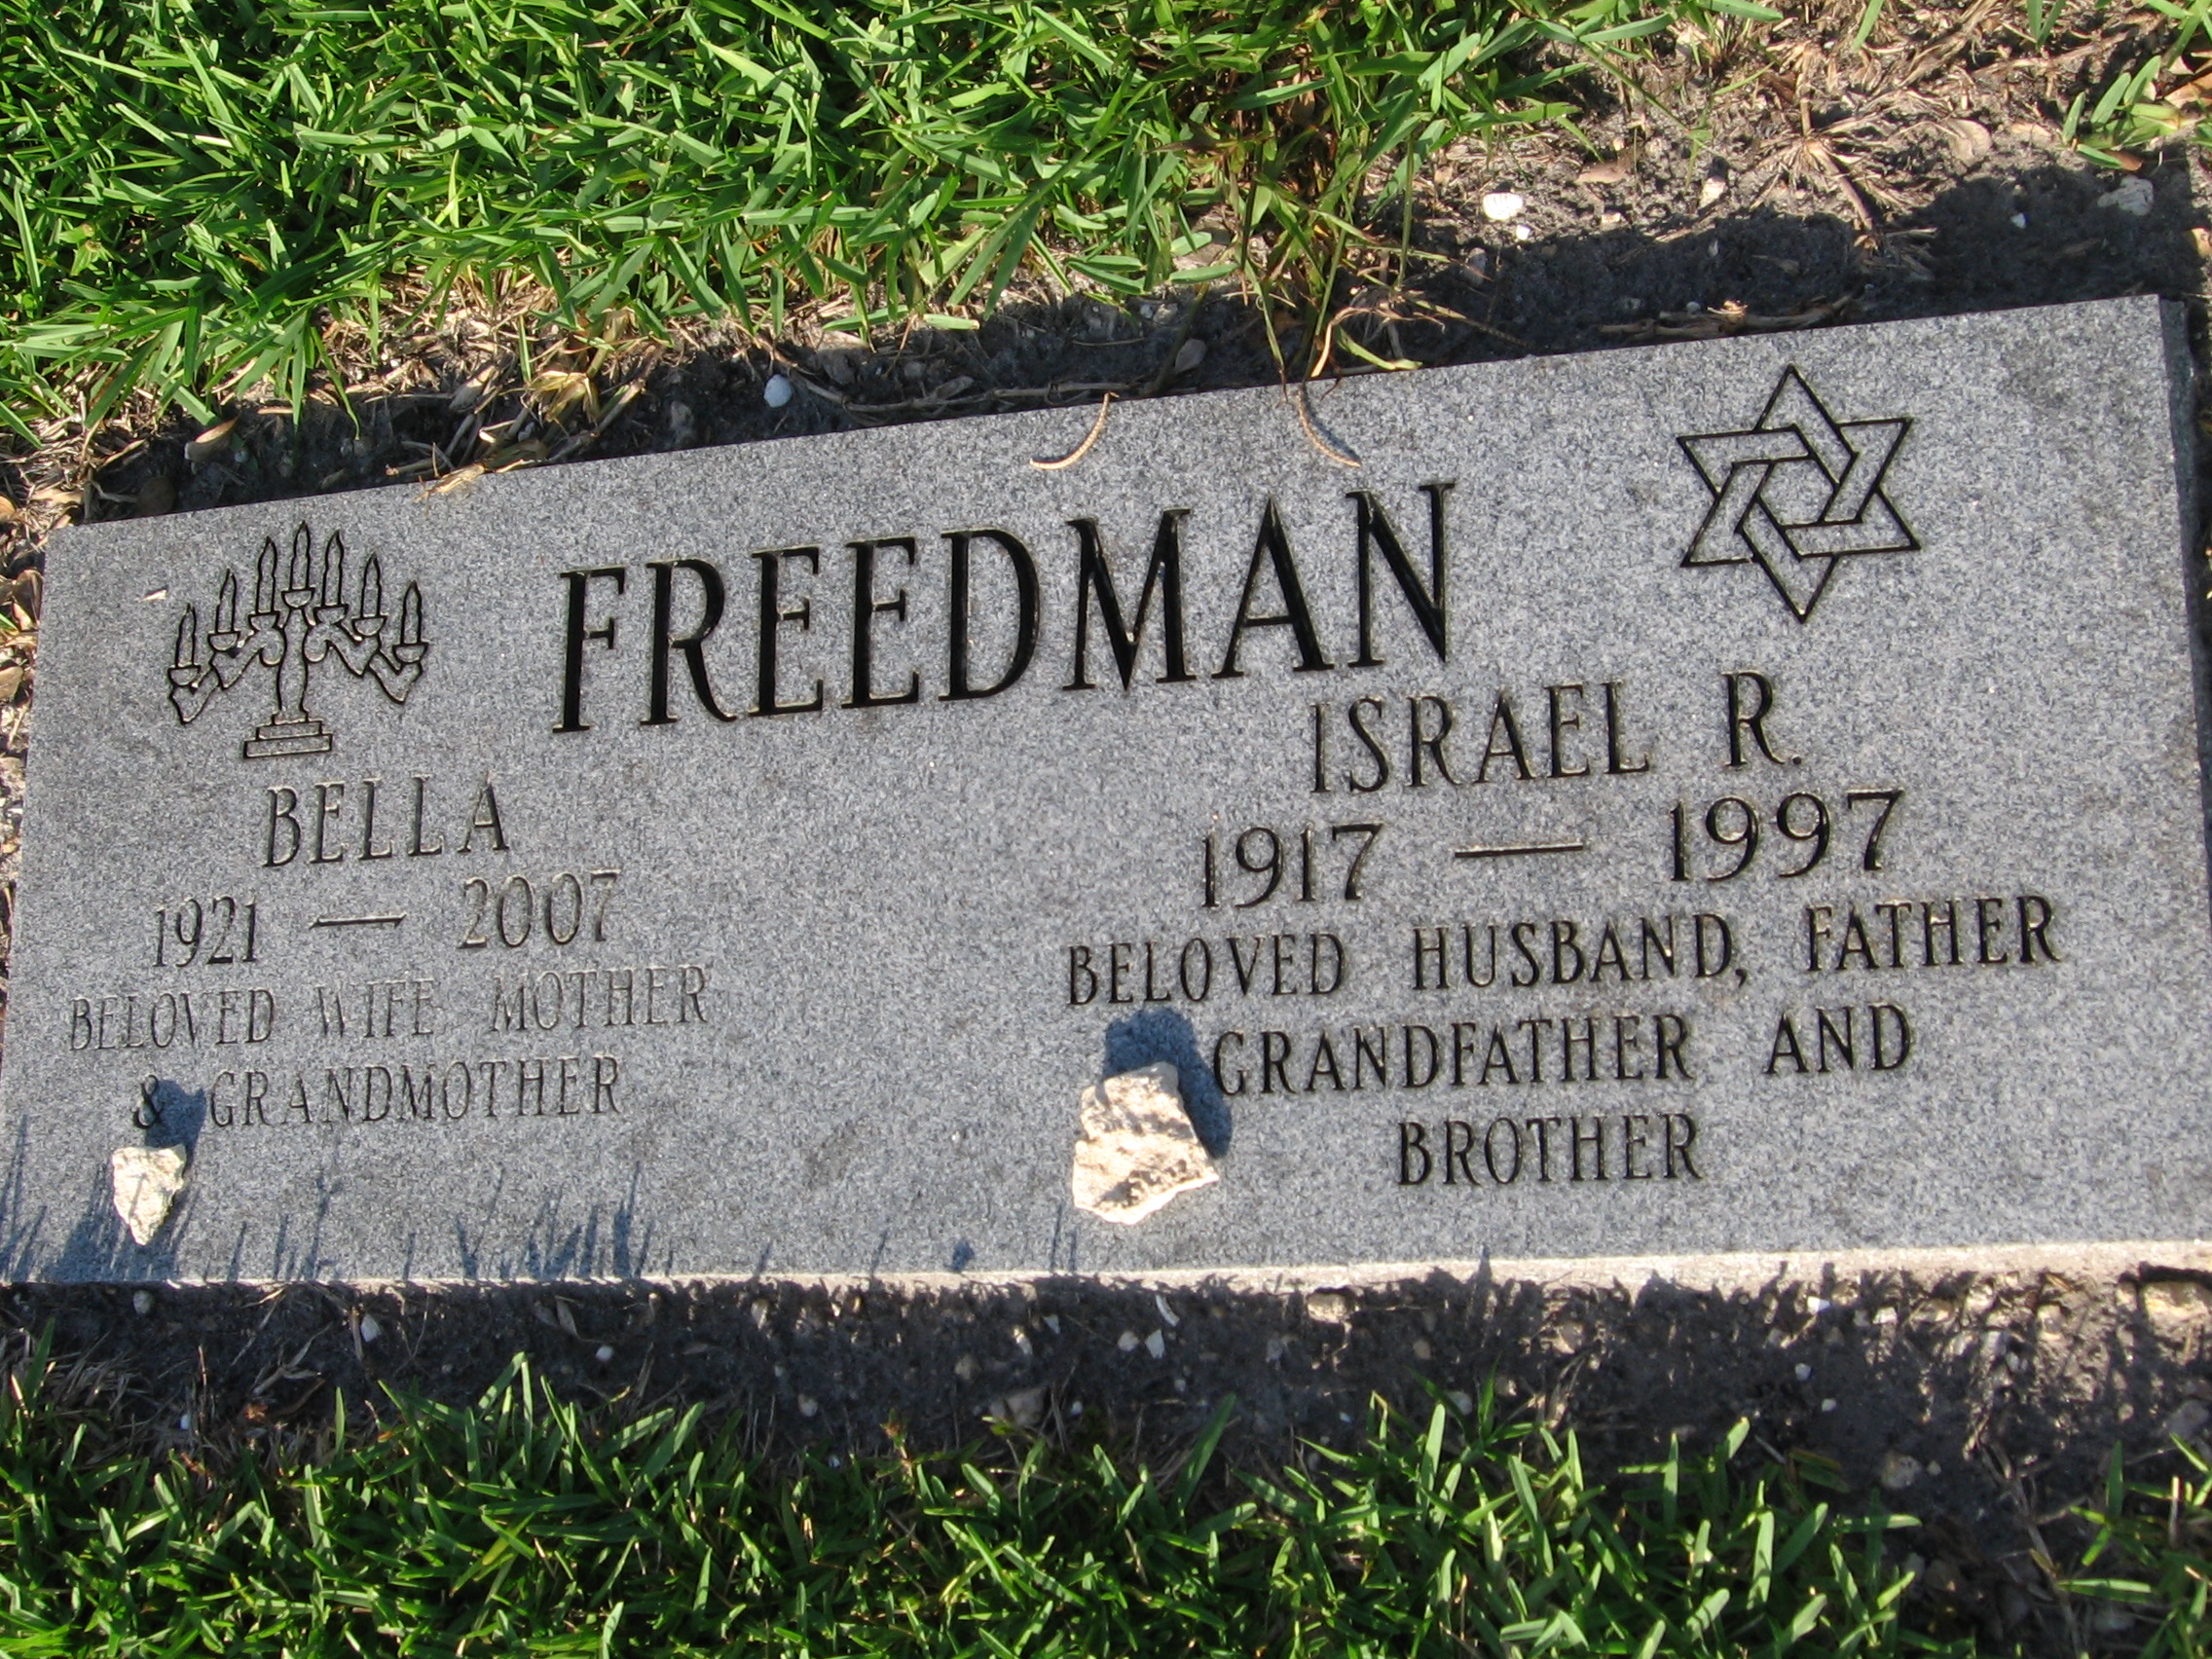 Israel R Freedman